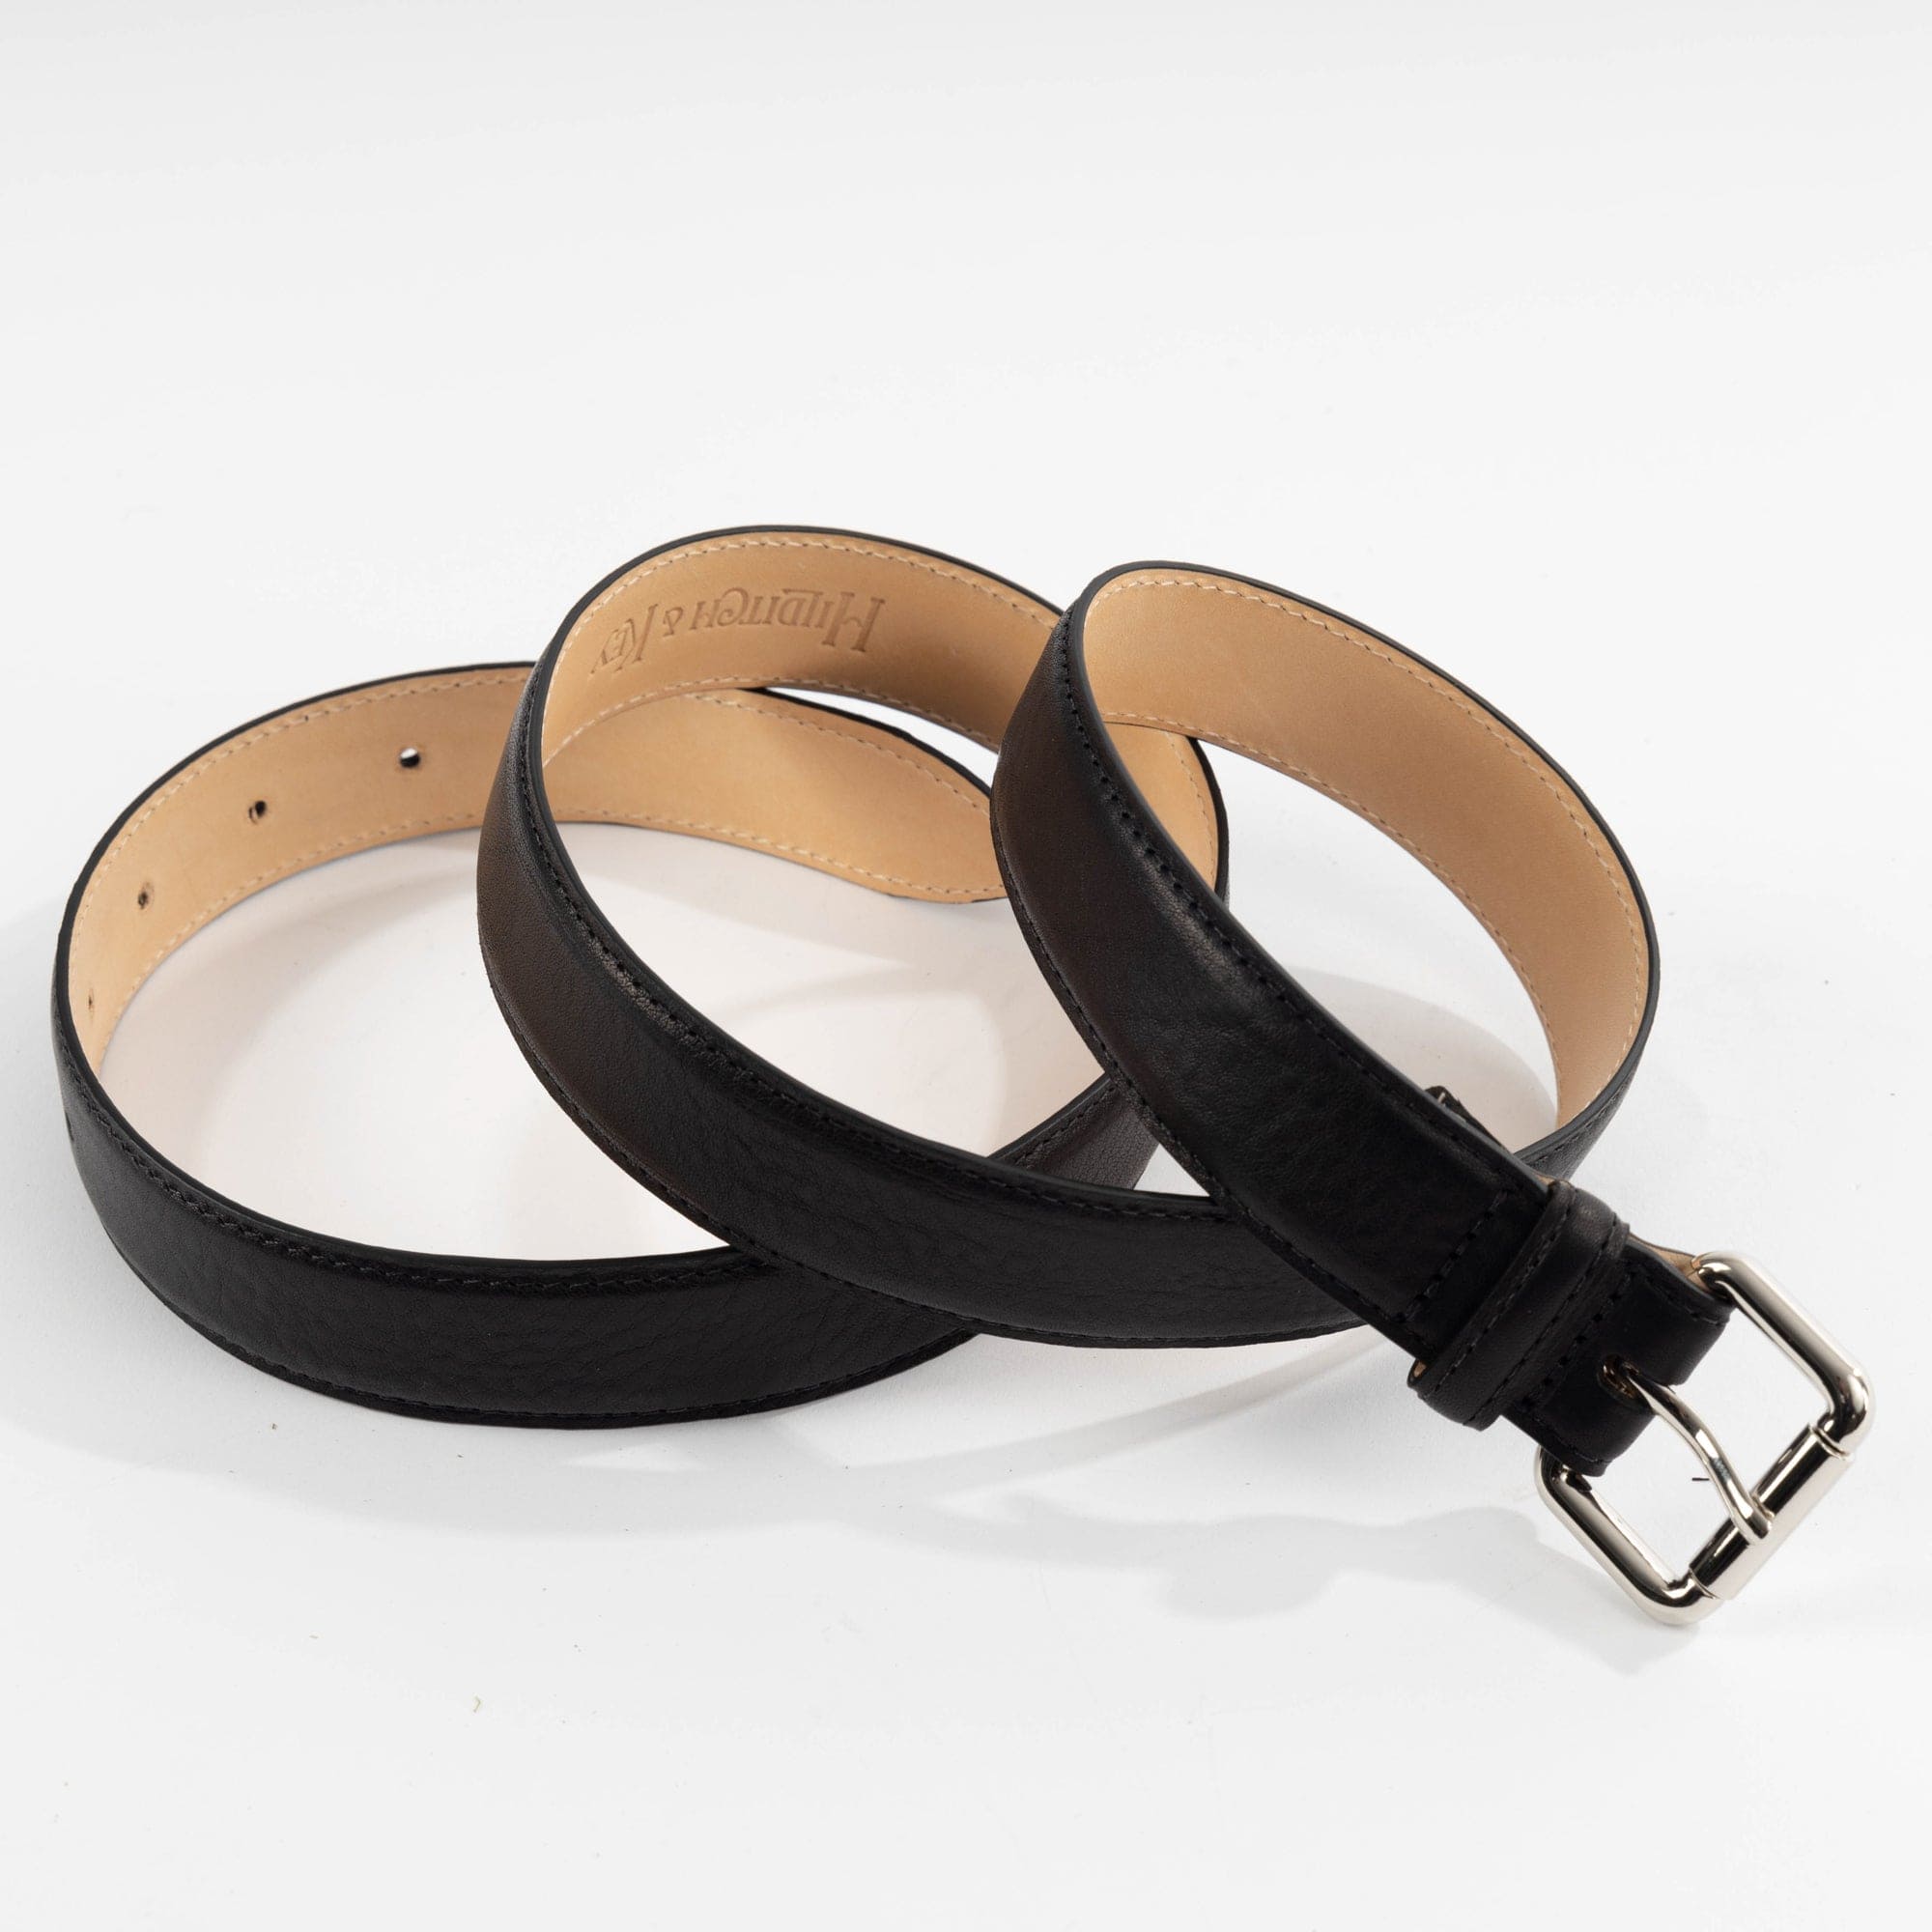 Reversible belt in black and brown - James - The Nines